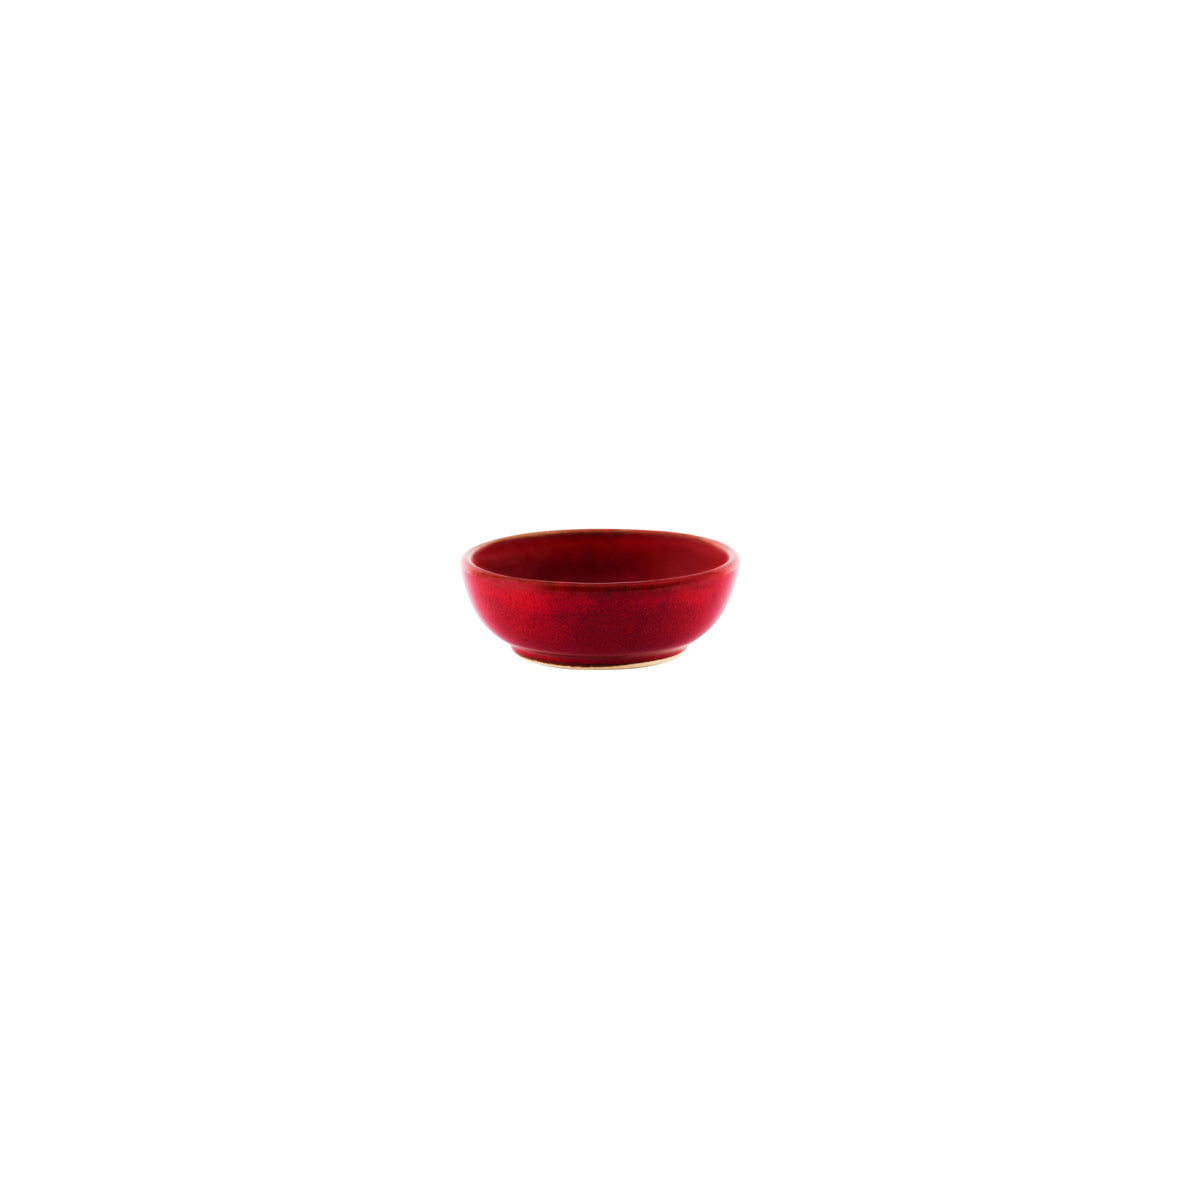 98208 Tablekraft Artistica Reactive Red Round Sauce Dish 80mm Tomkin Australia Hospitality Supplies